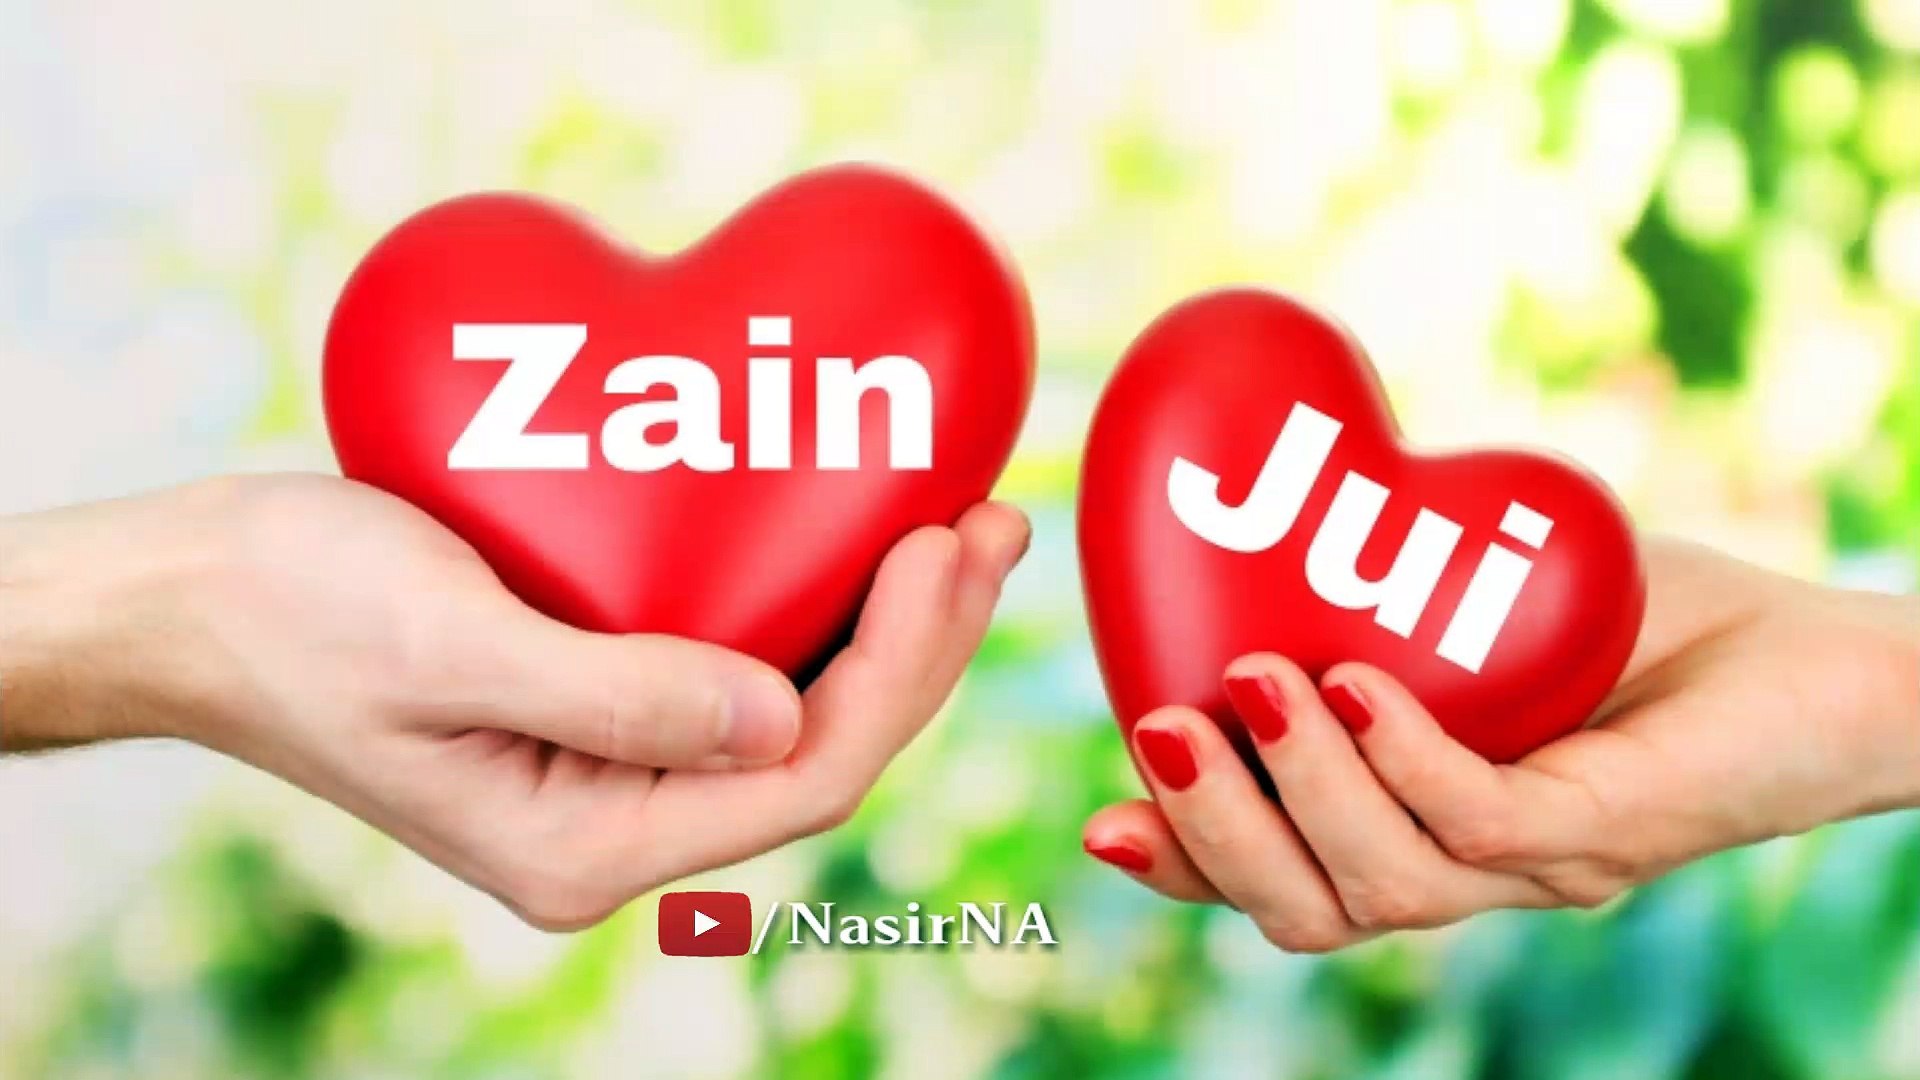 Zain love jui WhatsApp video| Z & j love WhatsApp status video| New cover song hindi 2018